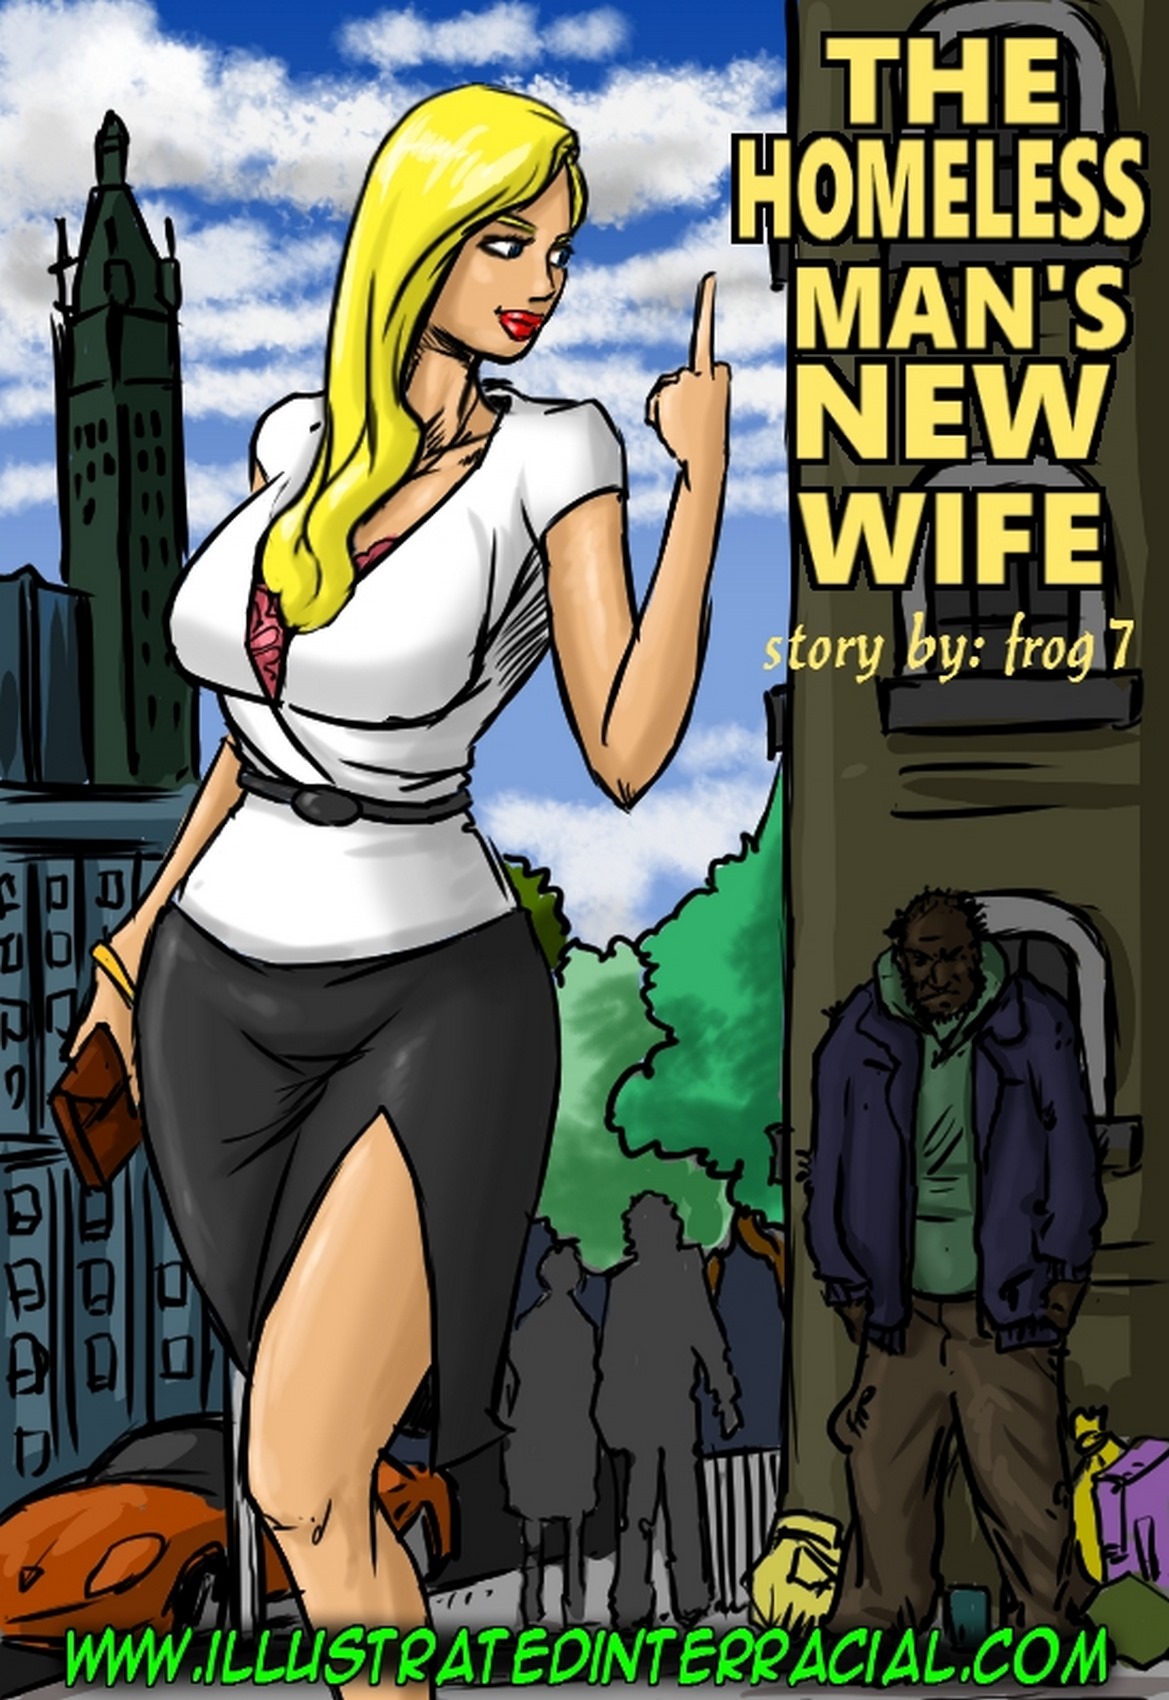 slut wife illustrated story